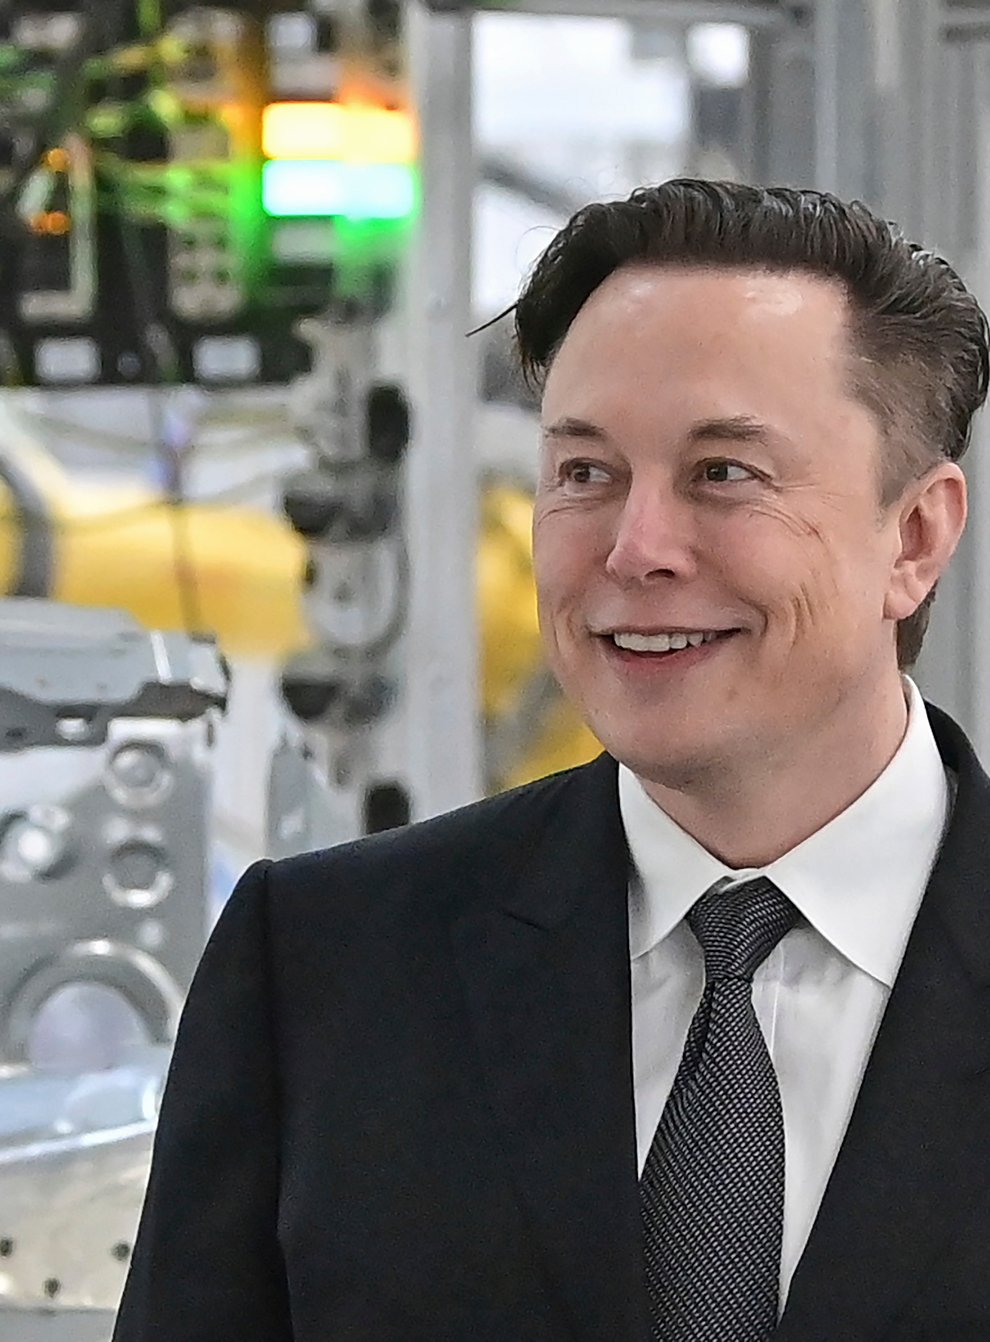 Tesla CEO Elon Musk has been accused of unlawful conduct (Patrick Pleul/Pool Photo via AP, File)